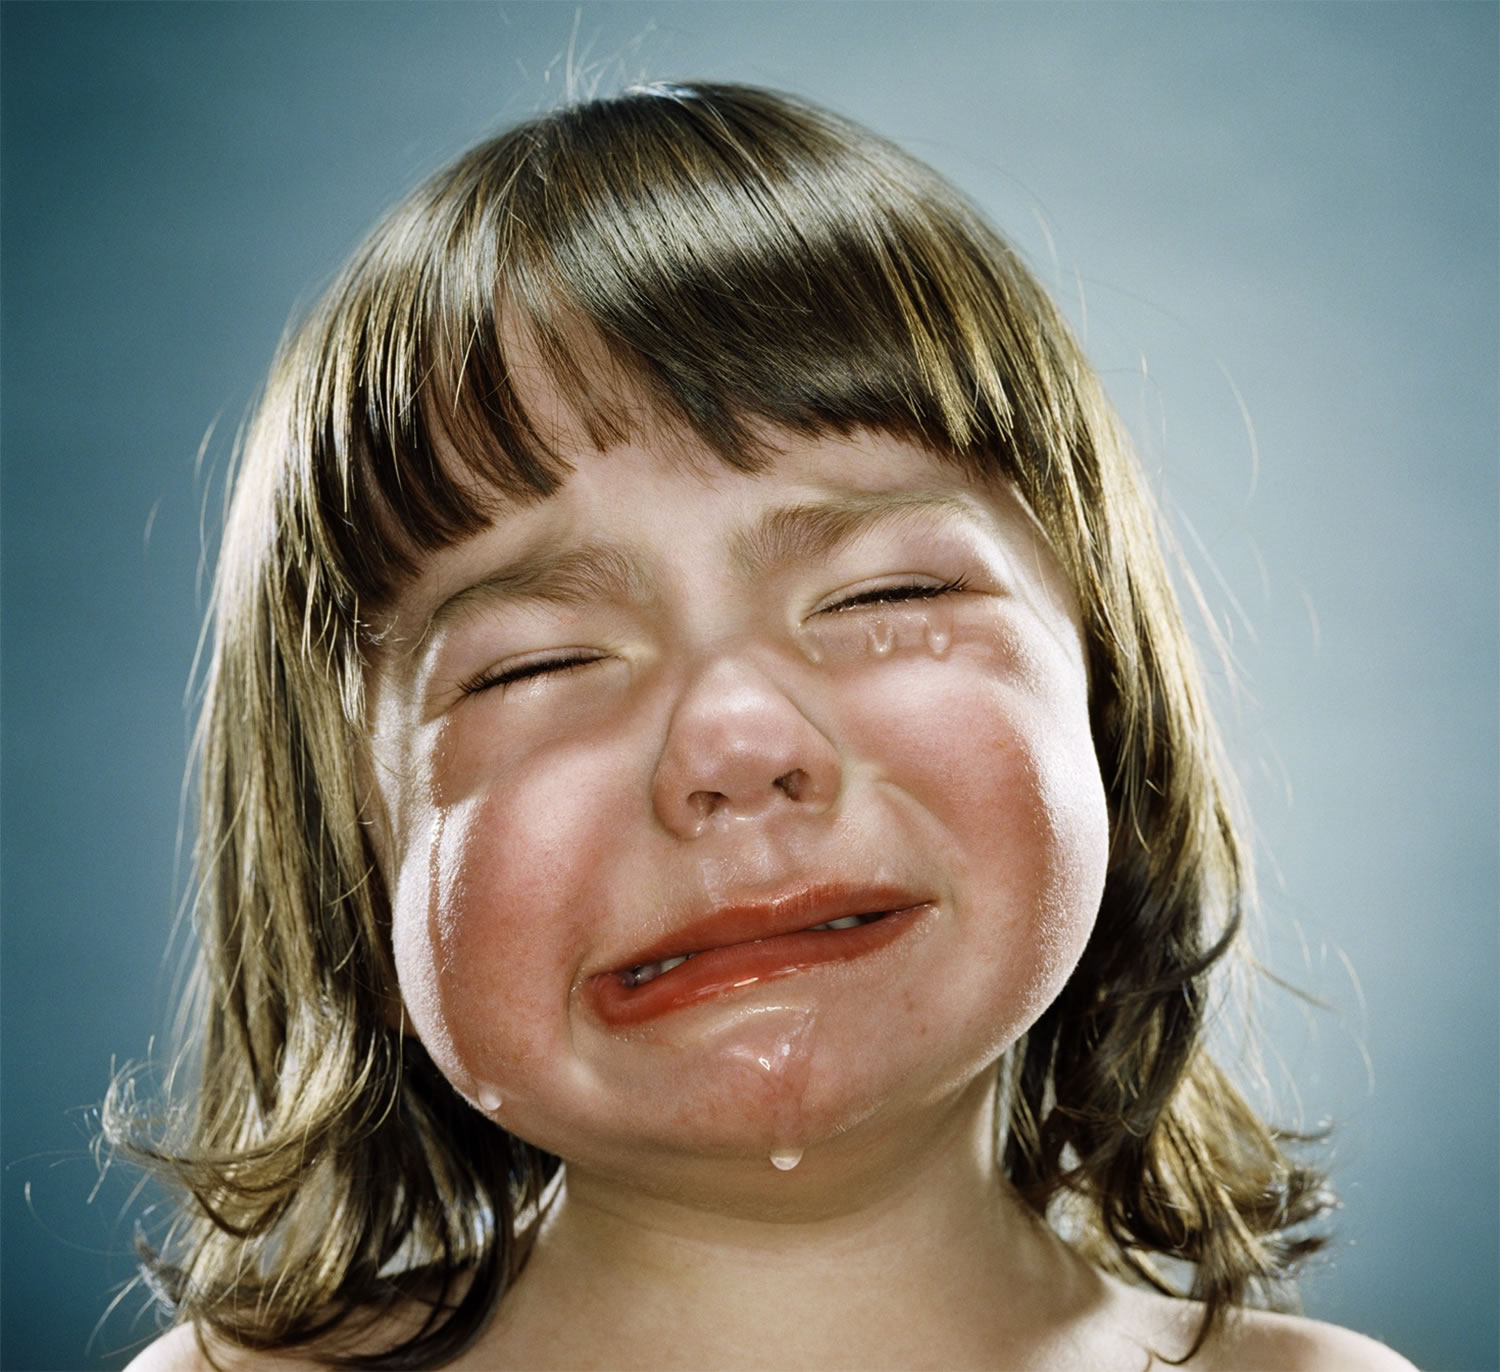 toddler crying by  jill greenberg